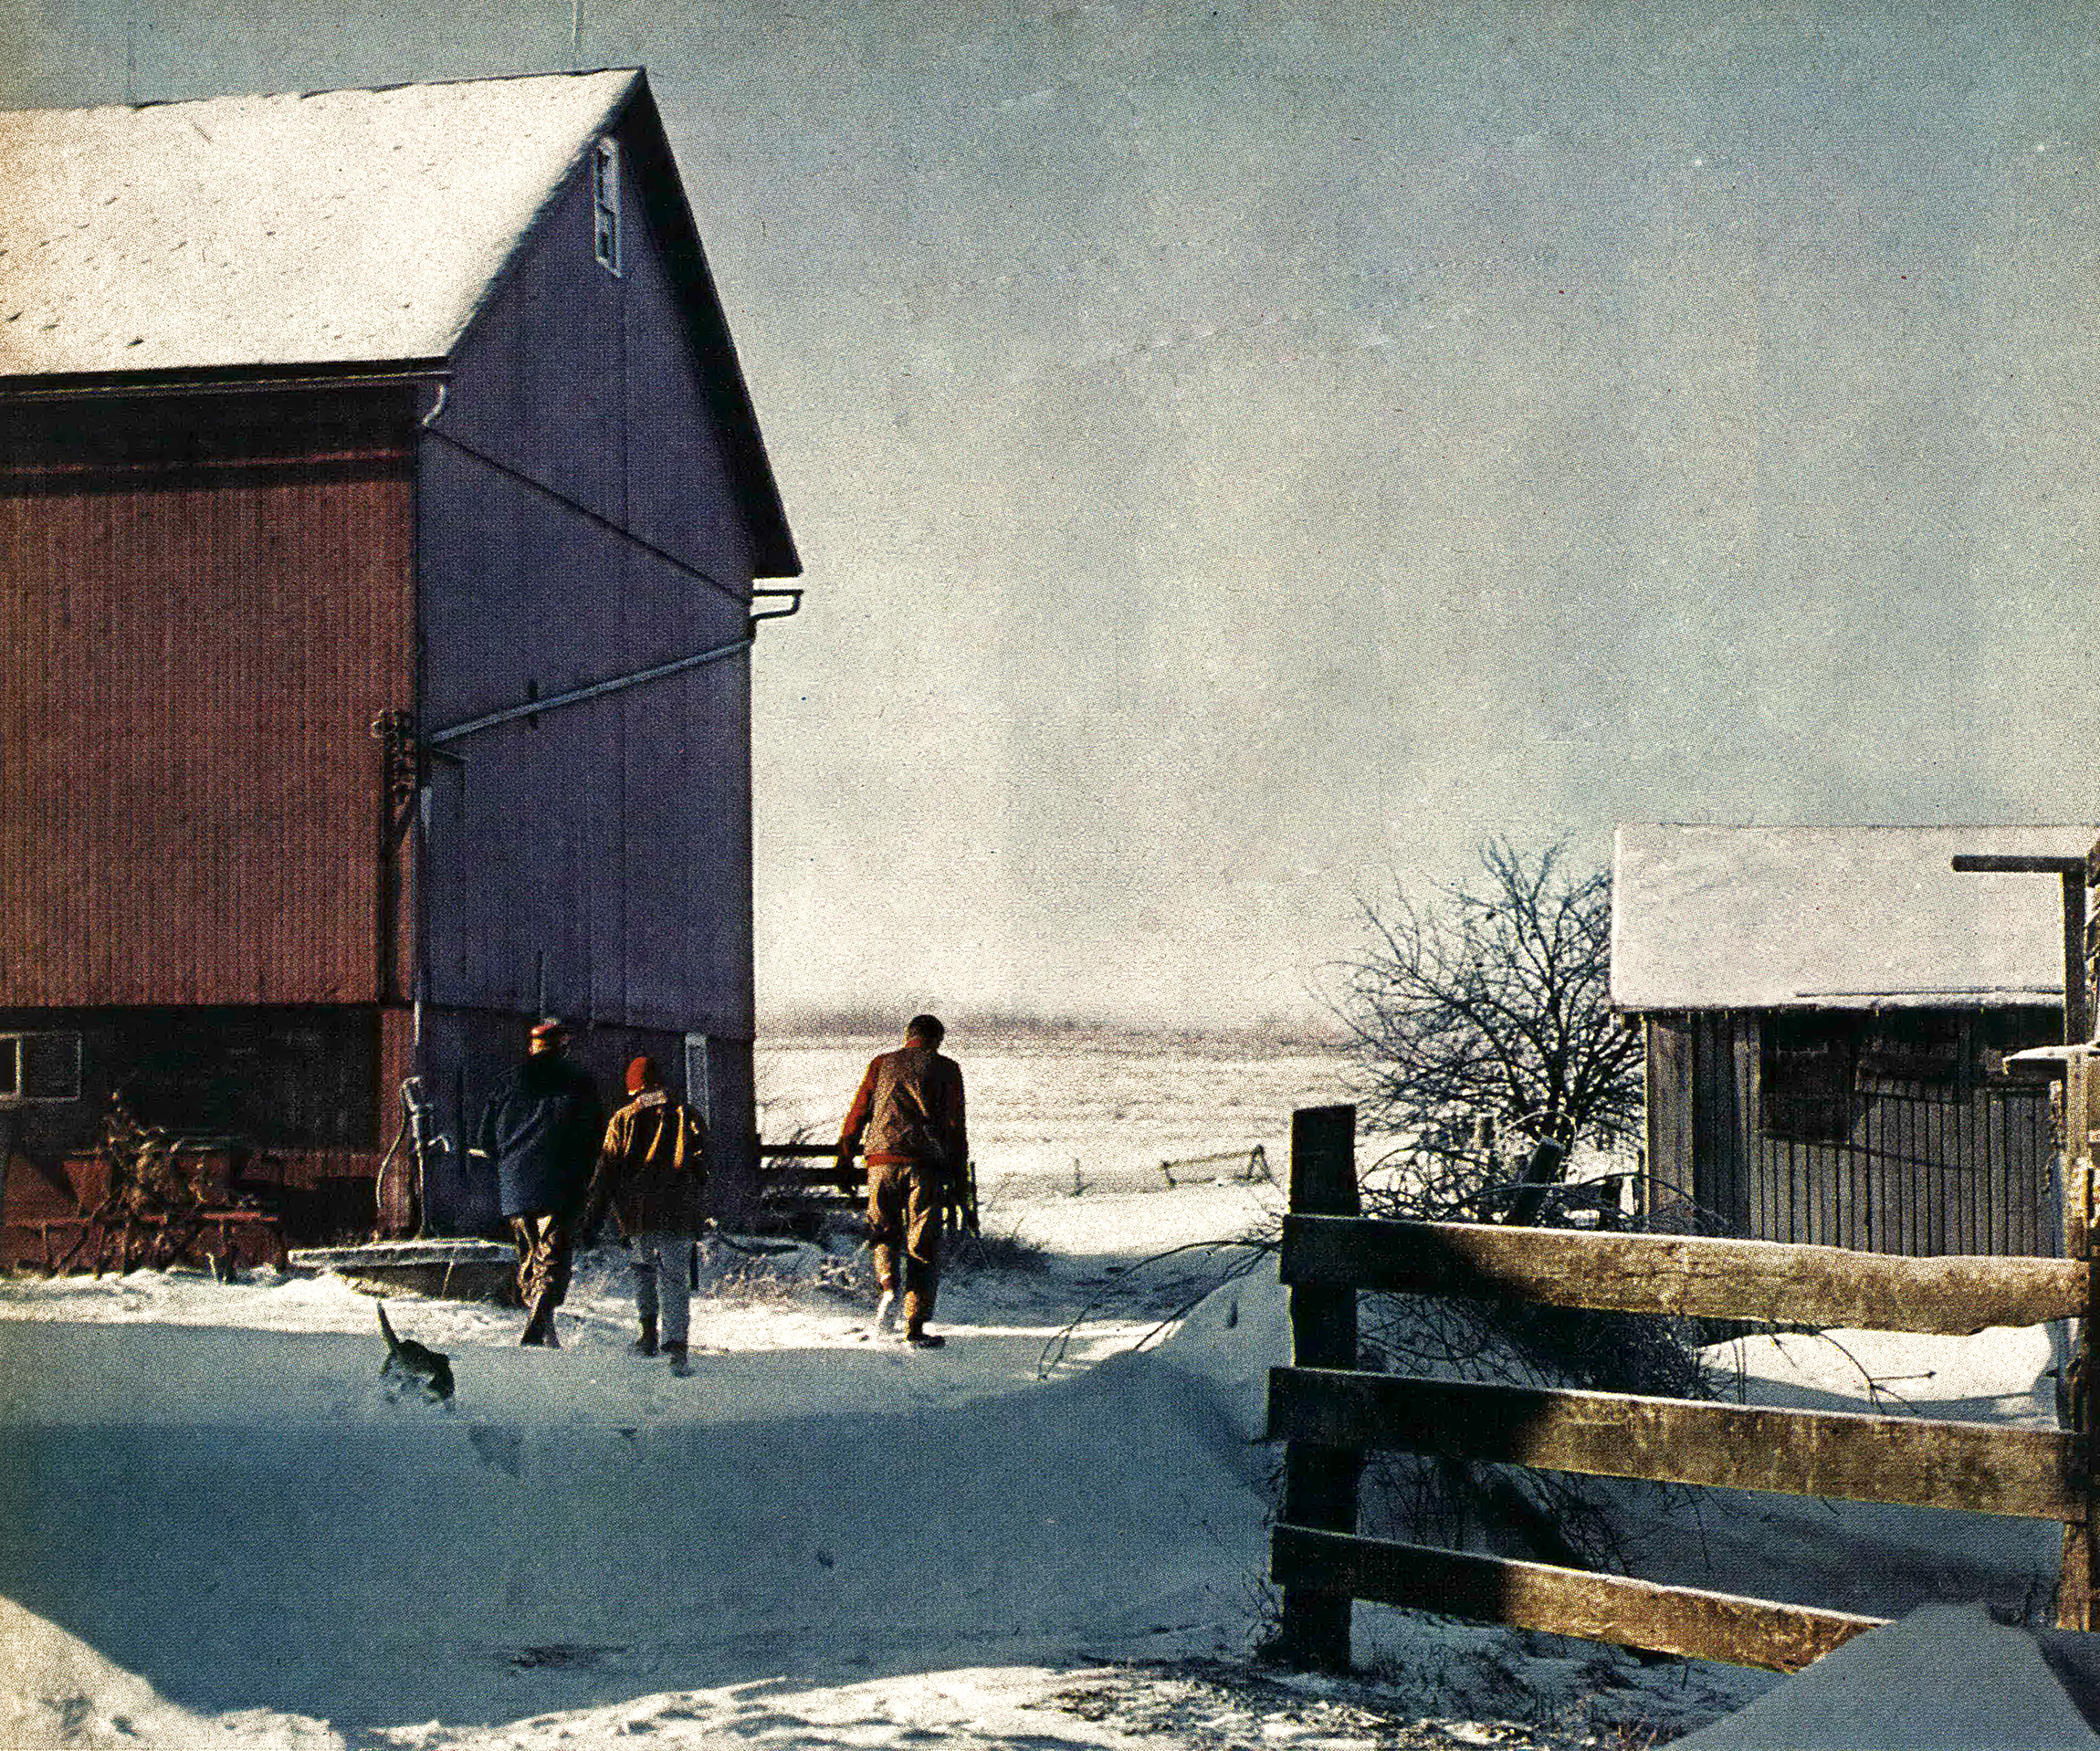 A Christmas barnyard rabbit hunting scene from 1963